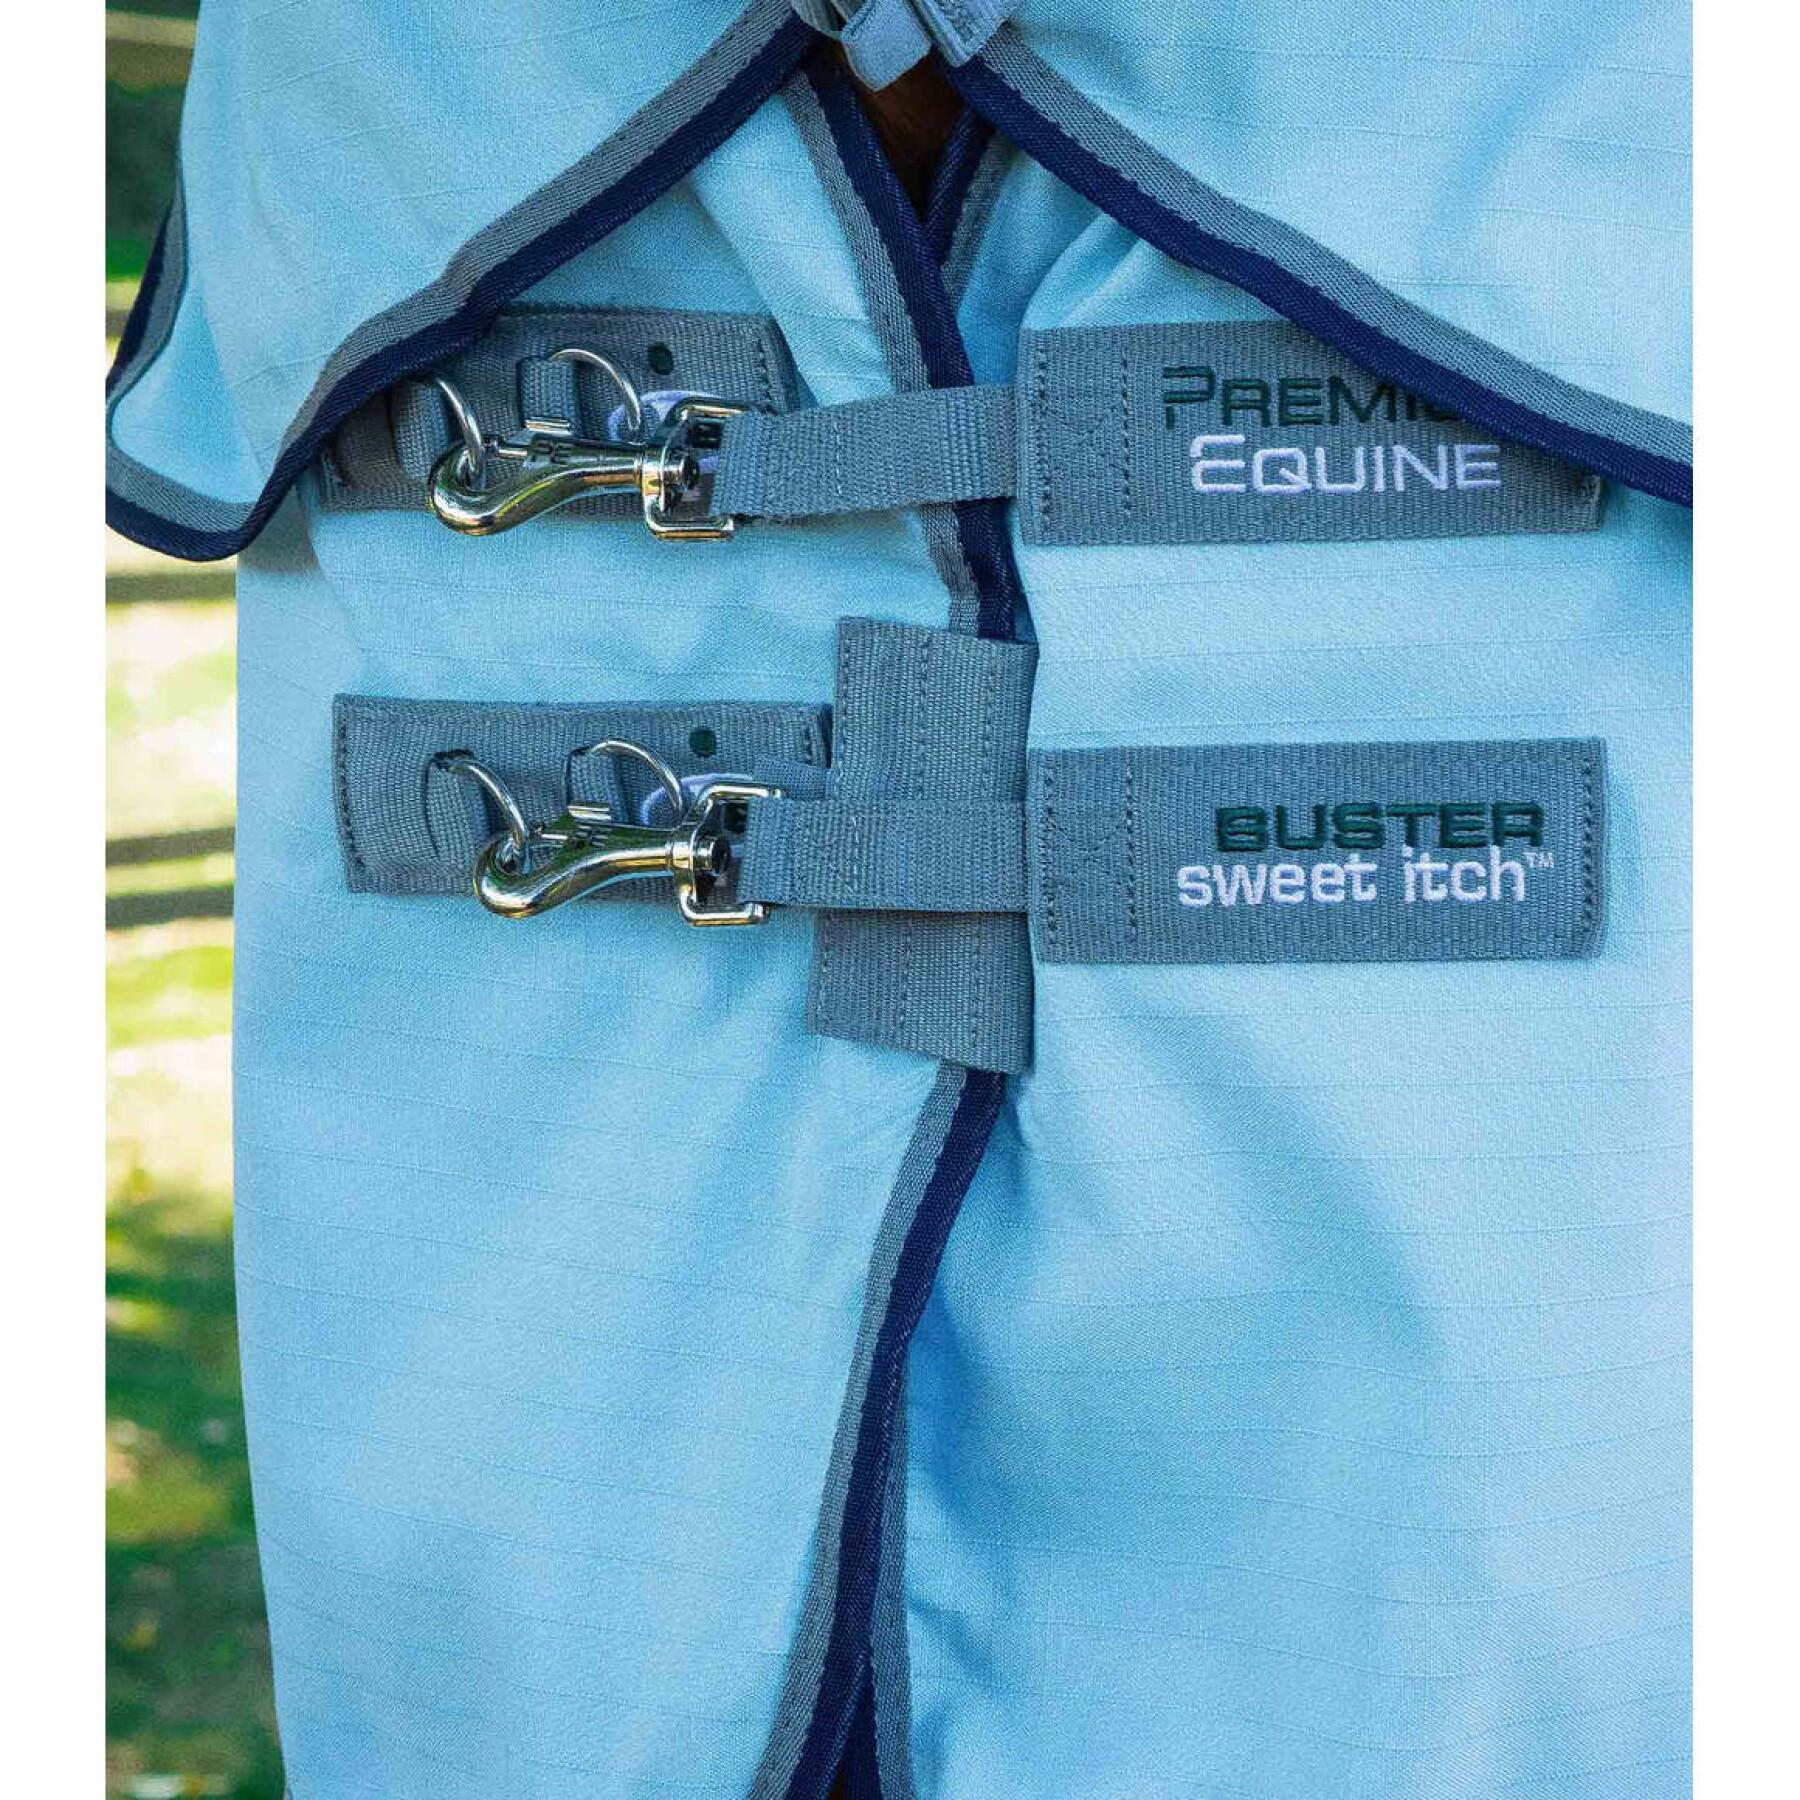 Couverture anti-mouches pour cheval avec sursangles Premier Equine Buster Sweet Itch